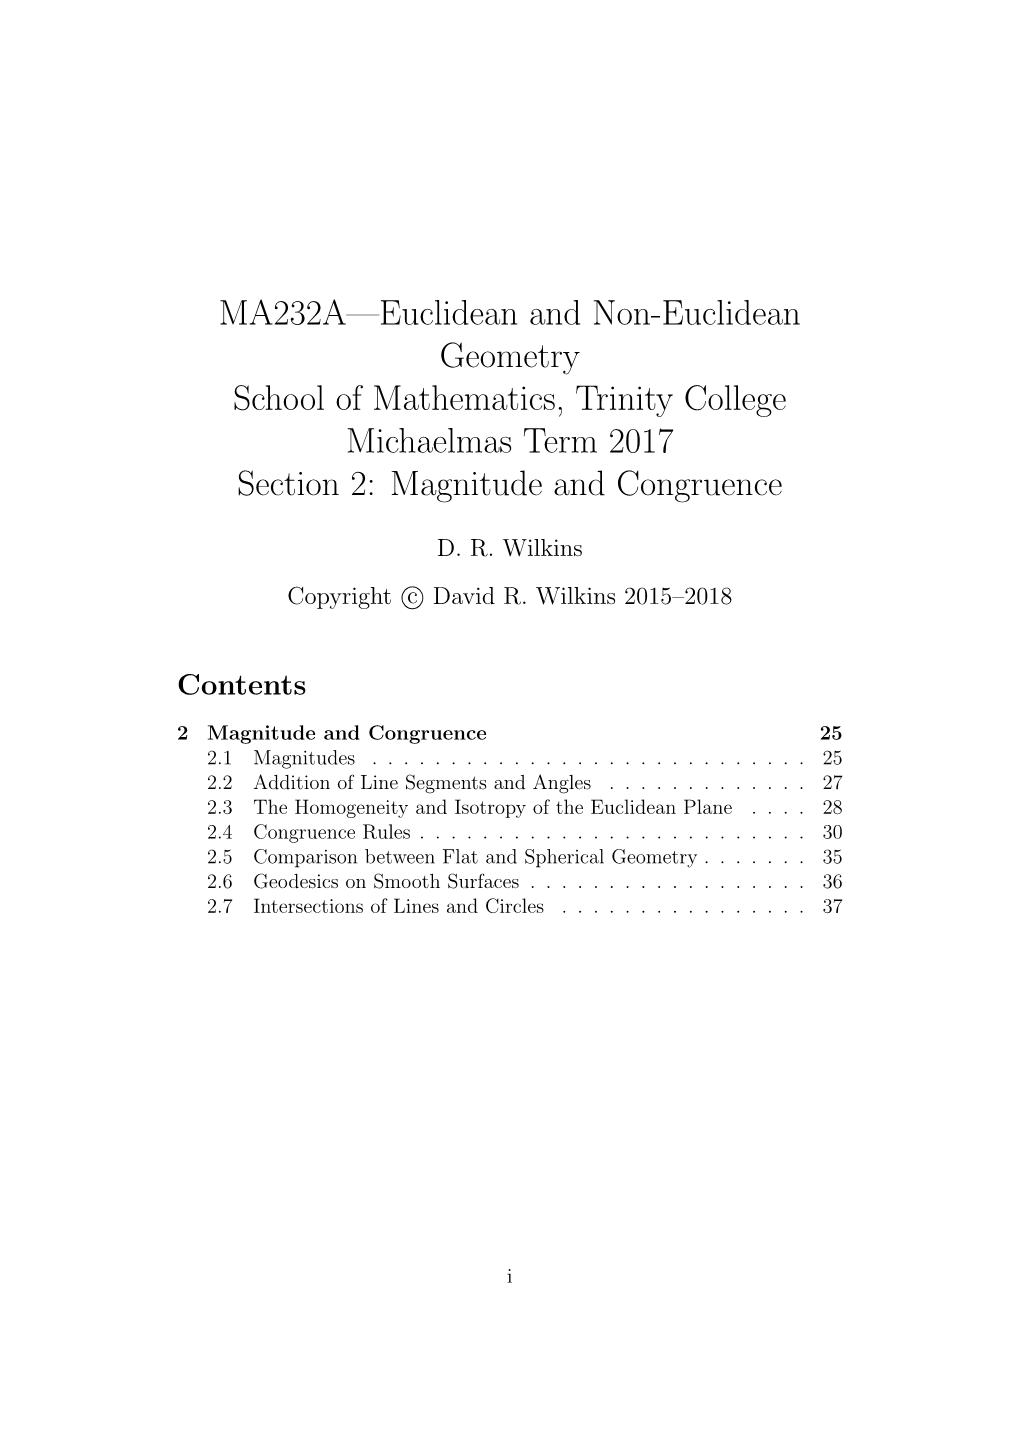 MA232A—Euclidean and Non-Euclidean Geometry School of Mathematics, Trinity College Michaelmas Term 2017 Section 2: Magnitude and Congruence